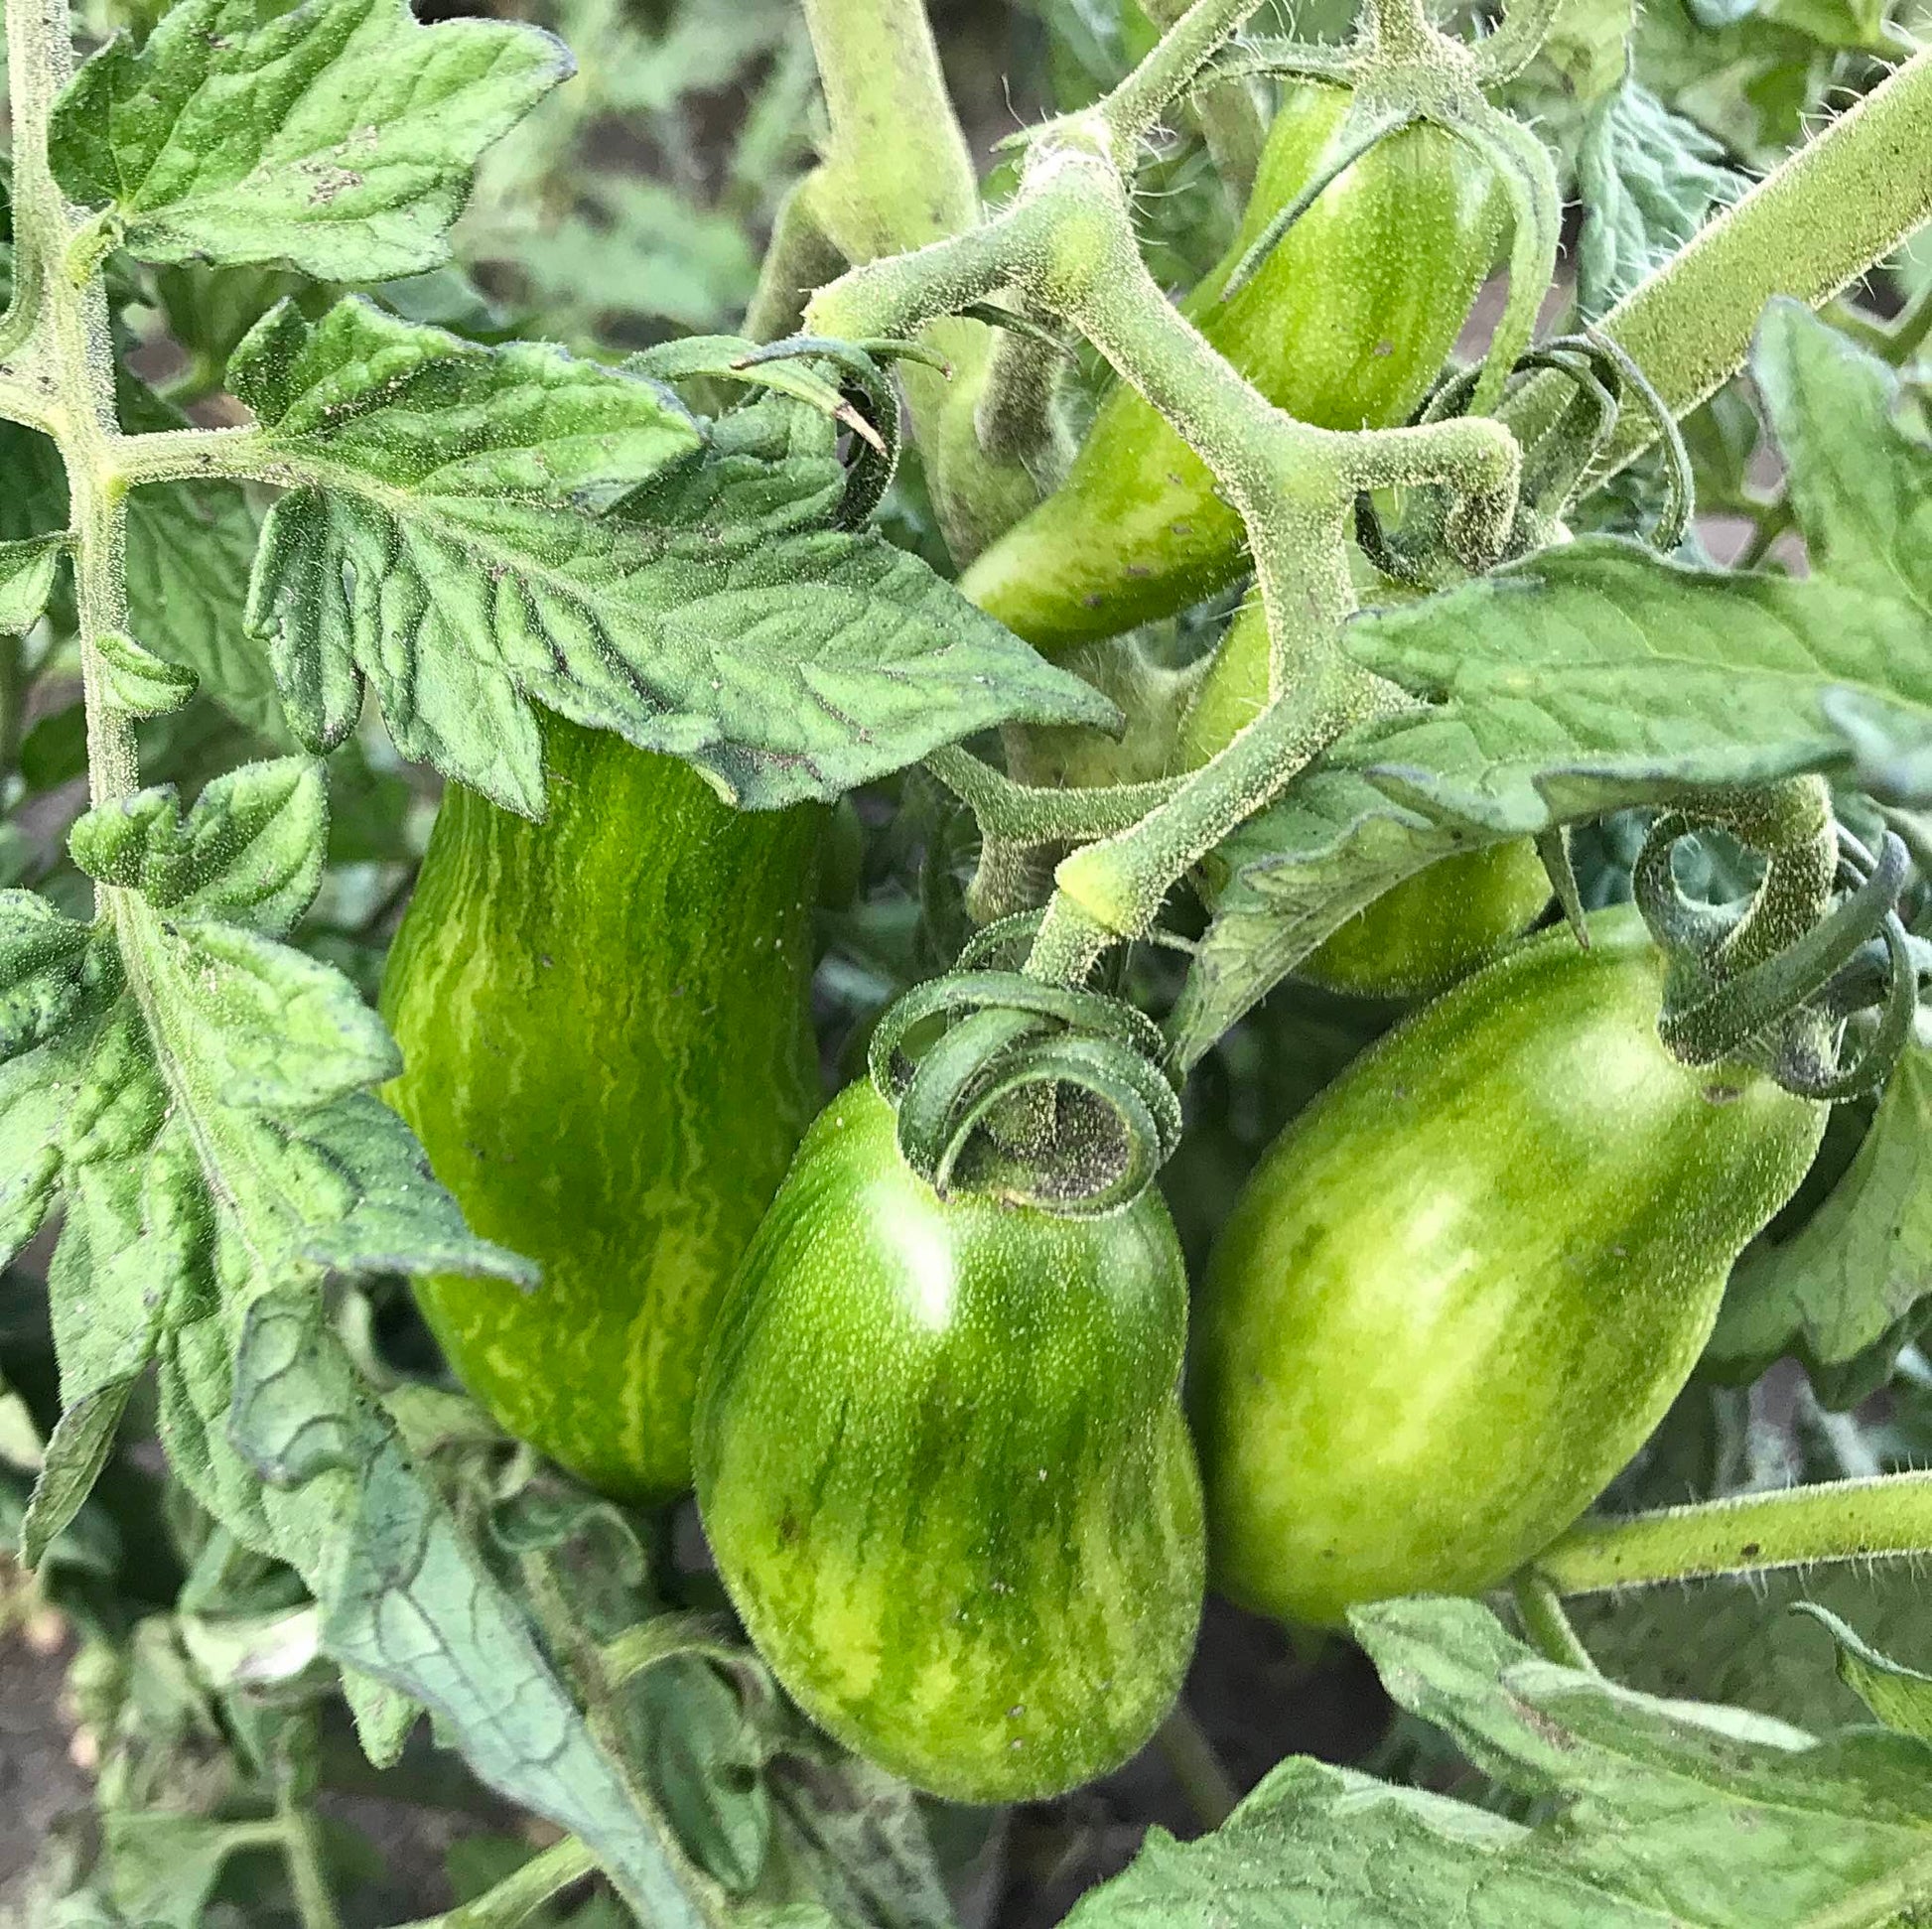 Half-ripe green roma tomatoes on a dwarf tomato plant.